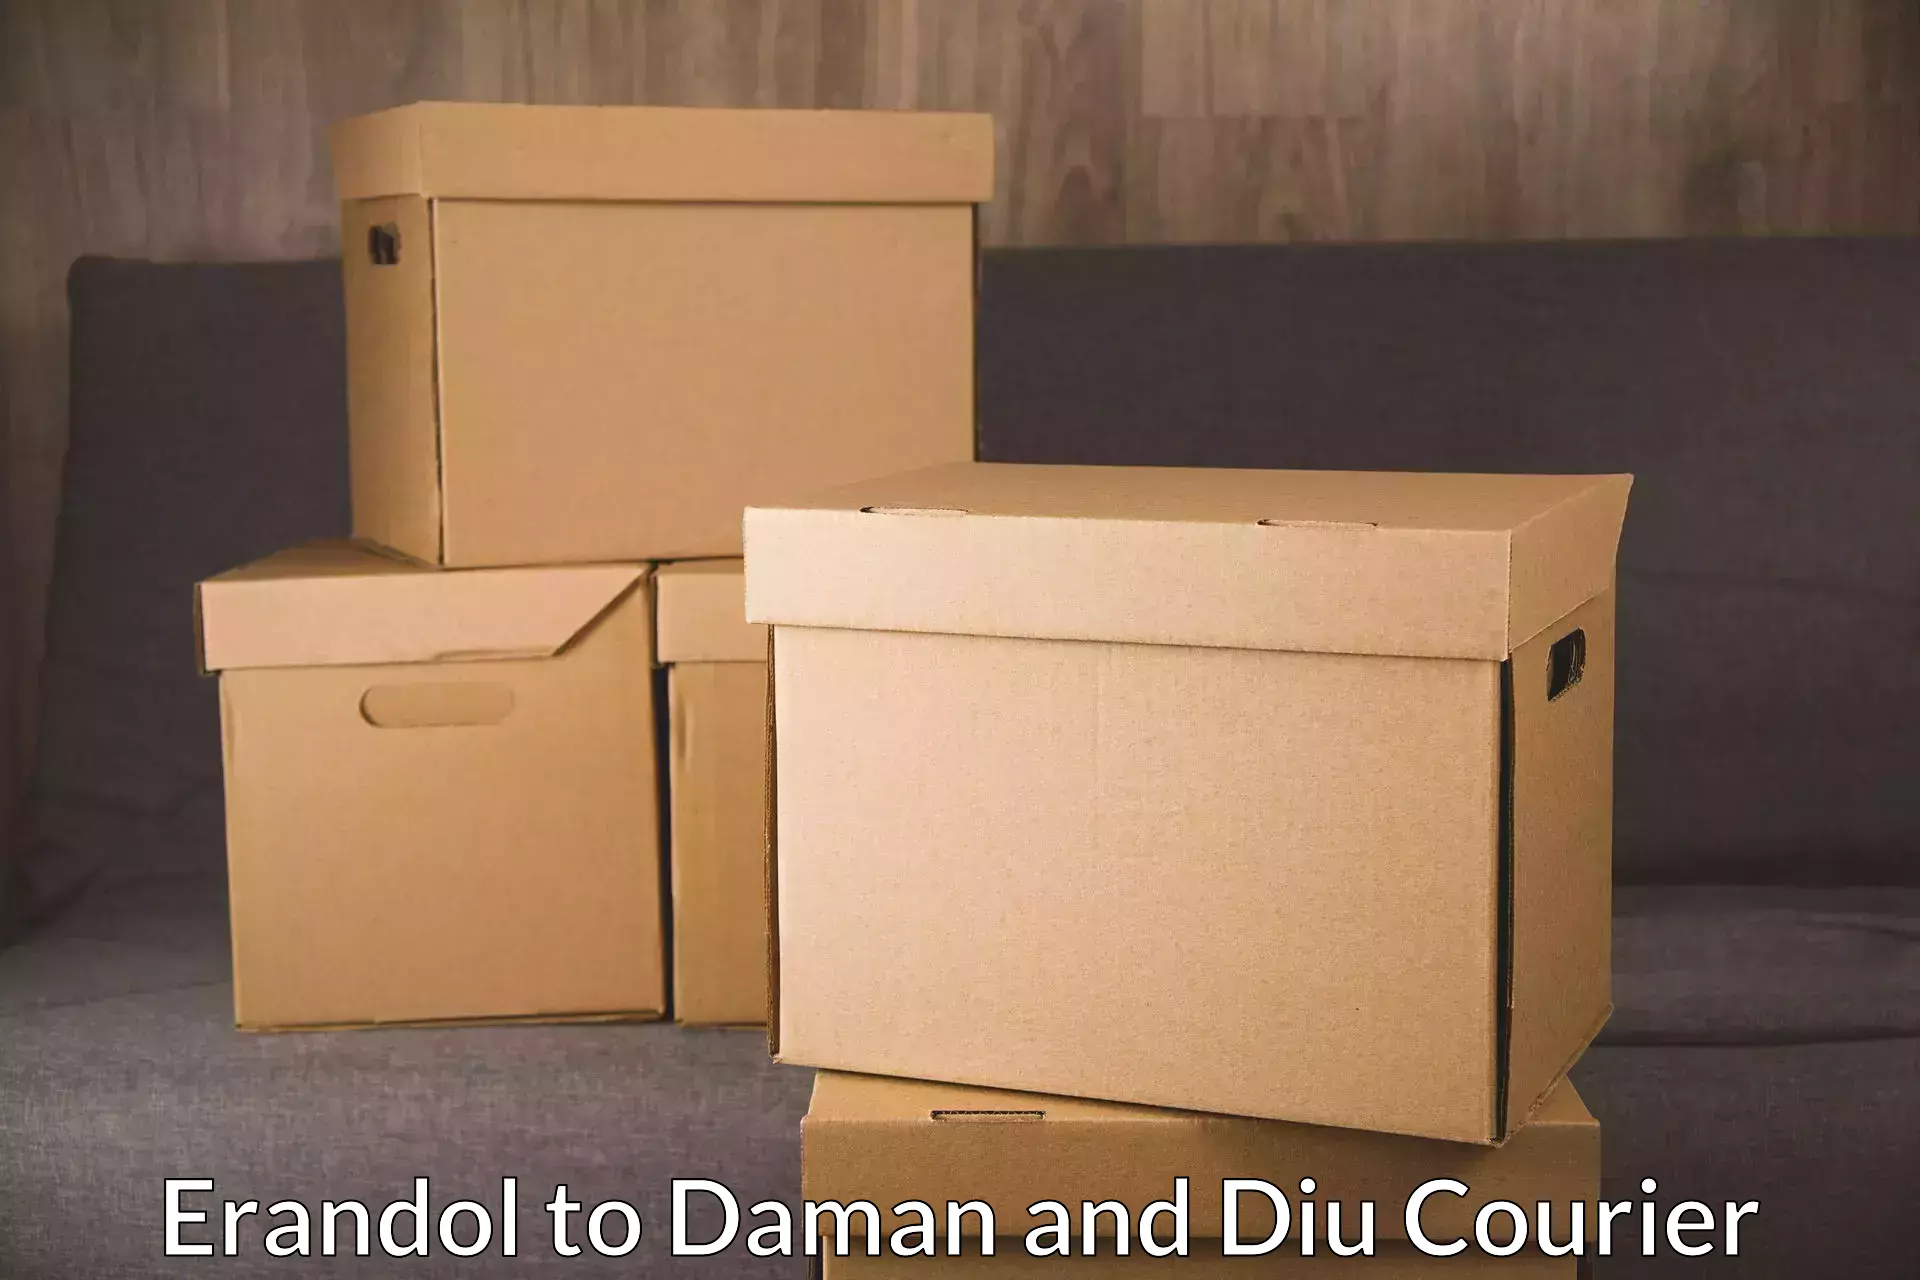 Urgent courier needs Erandol to Diu